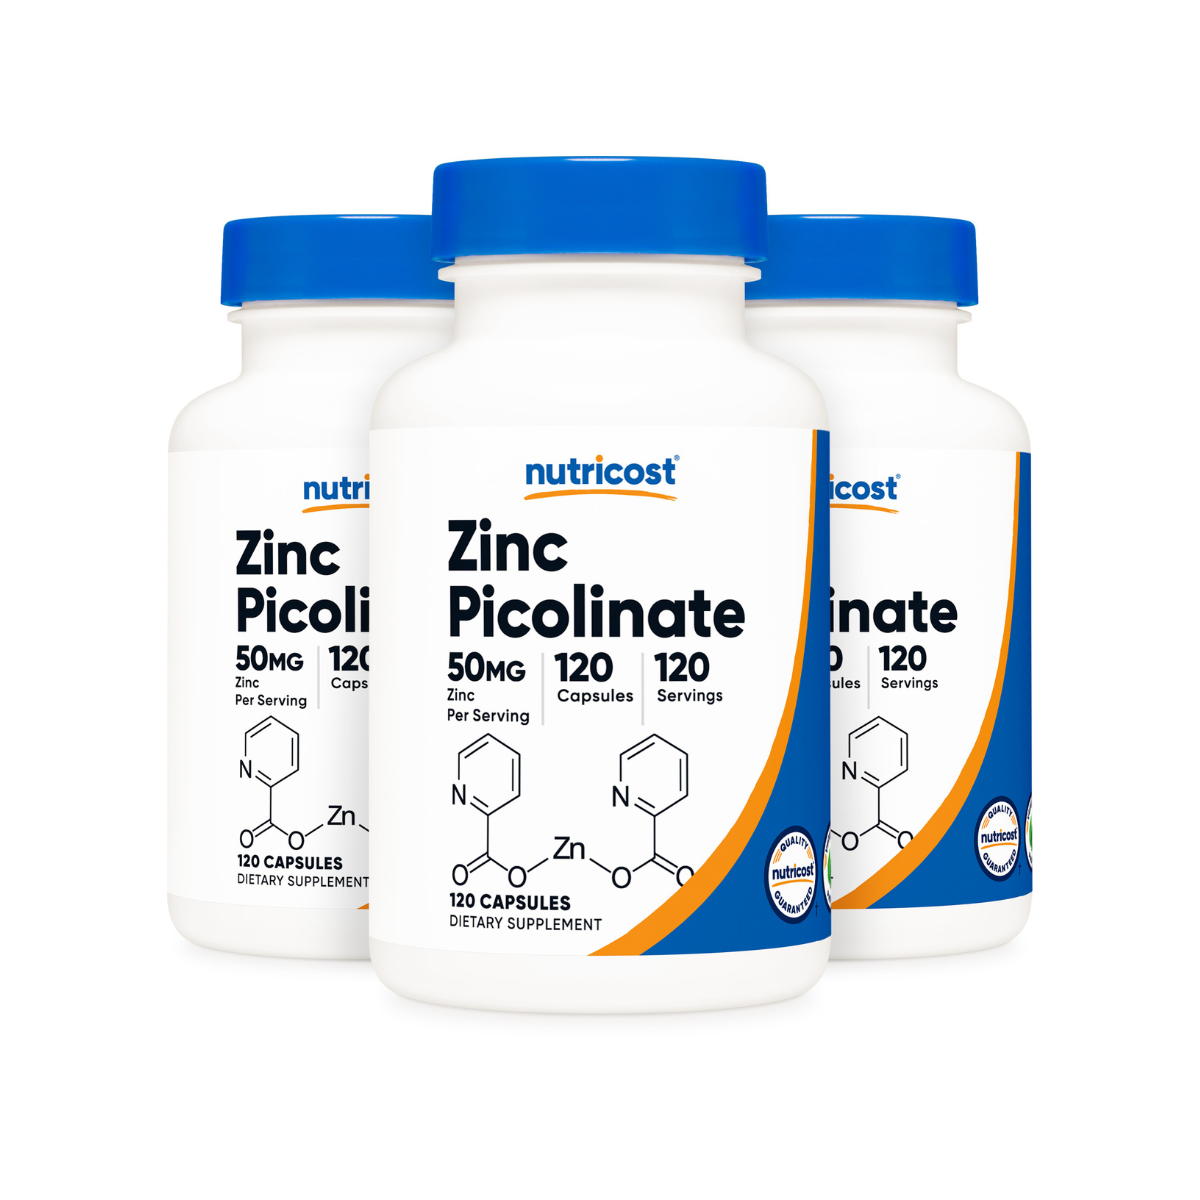 Nutricost Zinc Picolinate Capsules